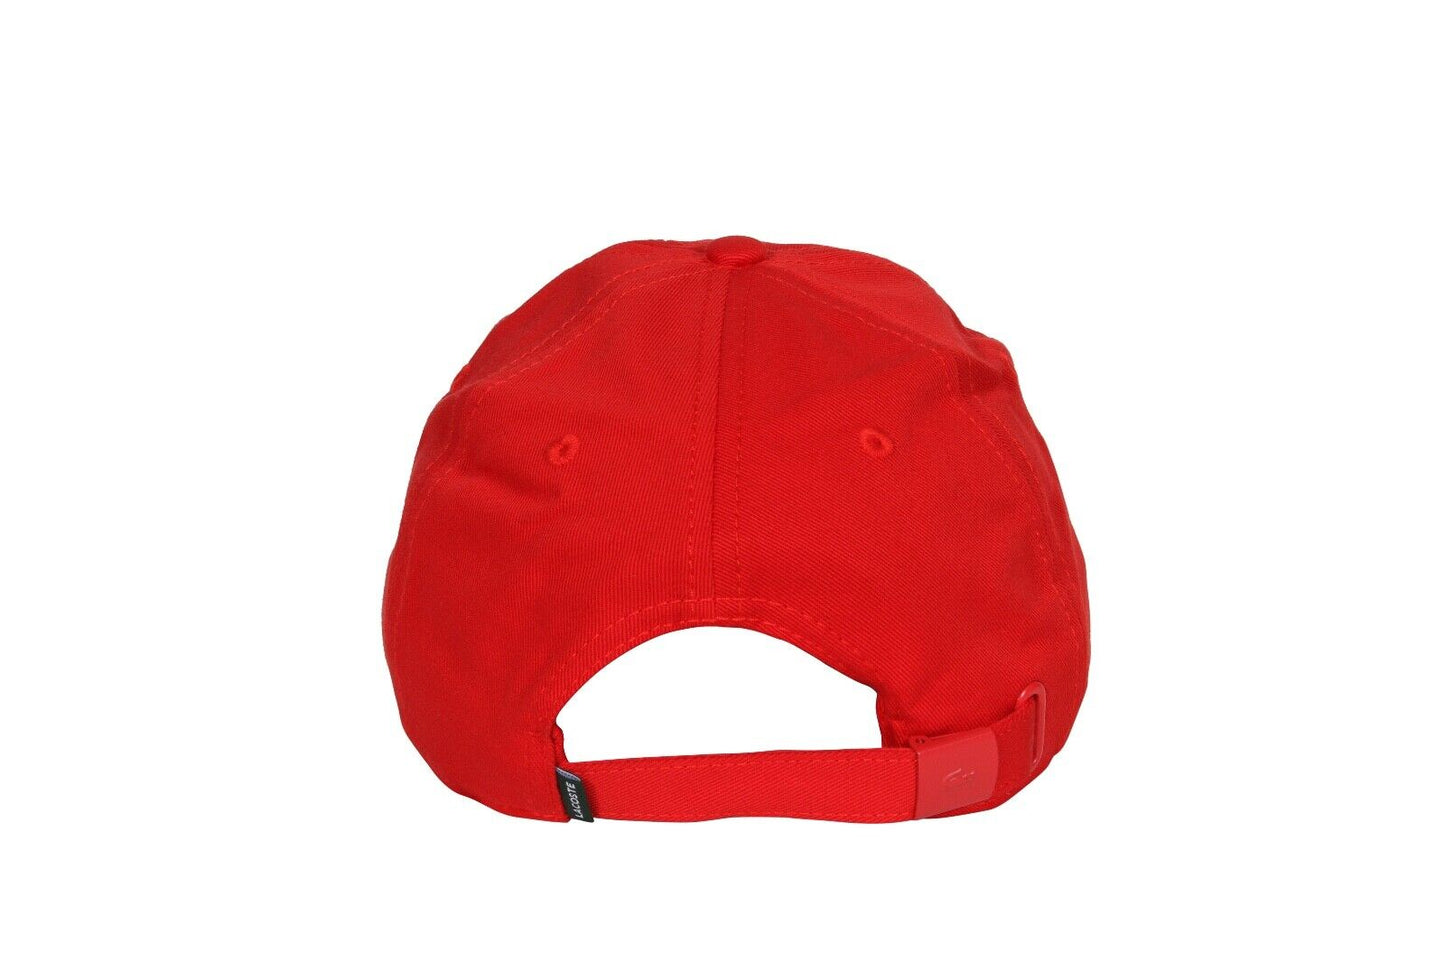 Lacoste Unisex Adjustable Organic Cotton Twill Cap in Red RK9871 51 240